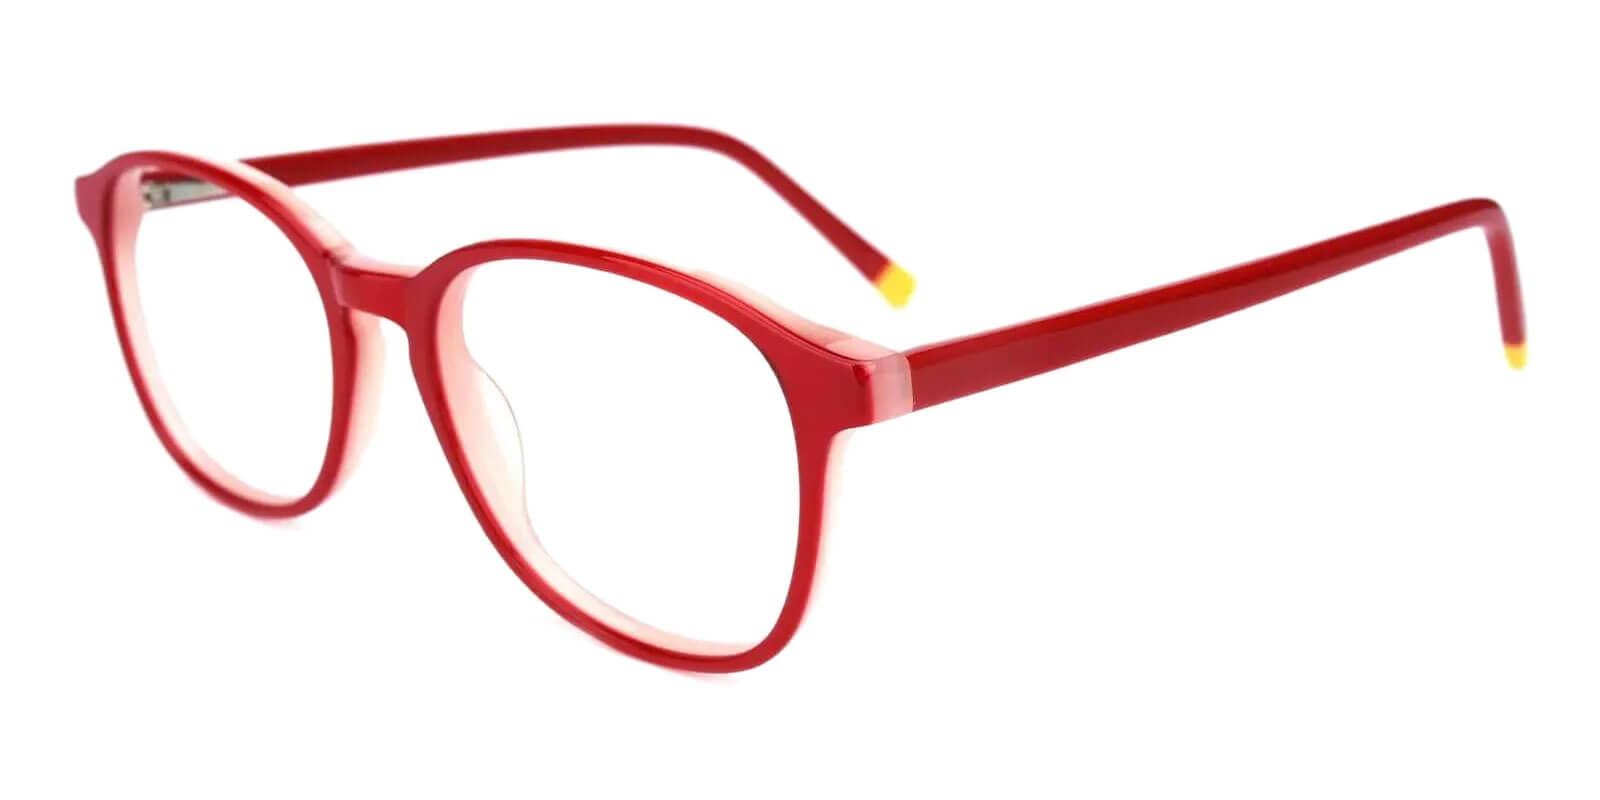 Fogelsville Red Acetate Eyeglasses , SpringHinges , UniversalBridgeFit Frames from ABBE Glasses